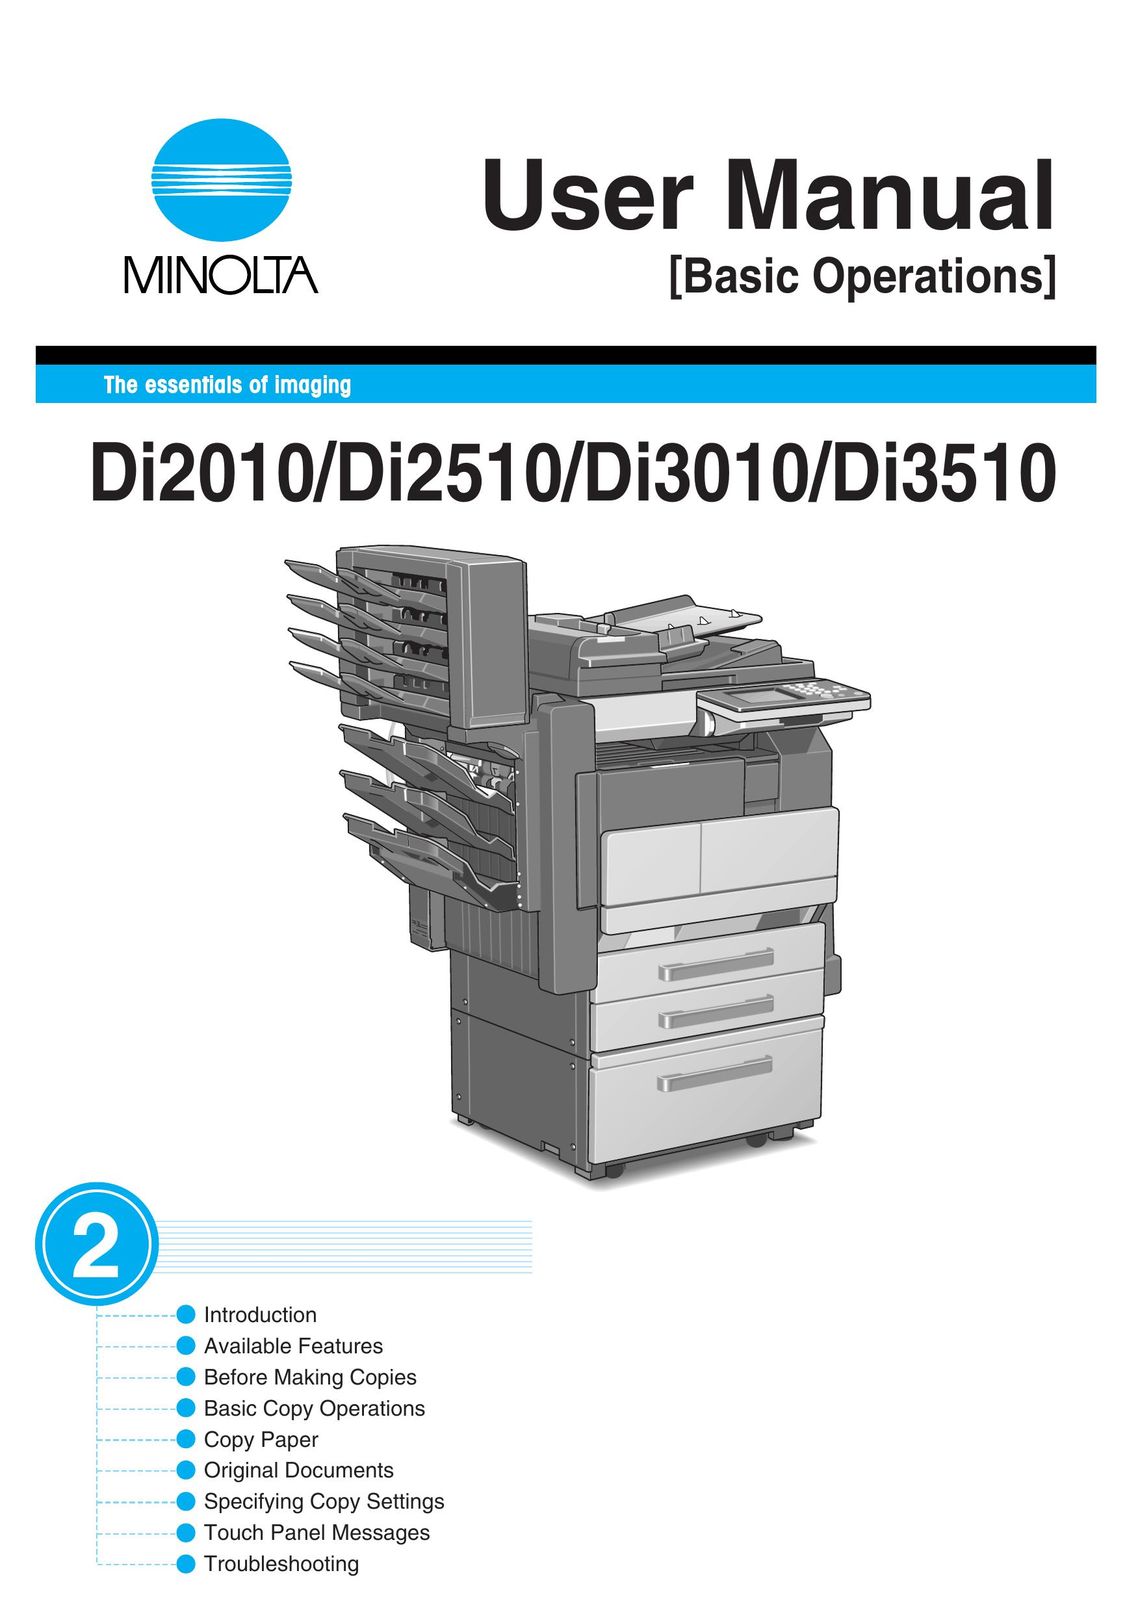 Minolta DI2010 Network Hardware User Manual